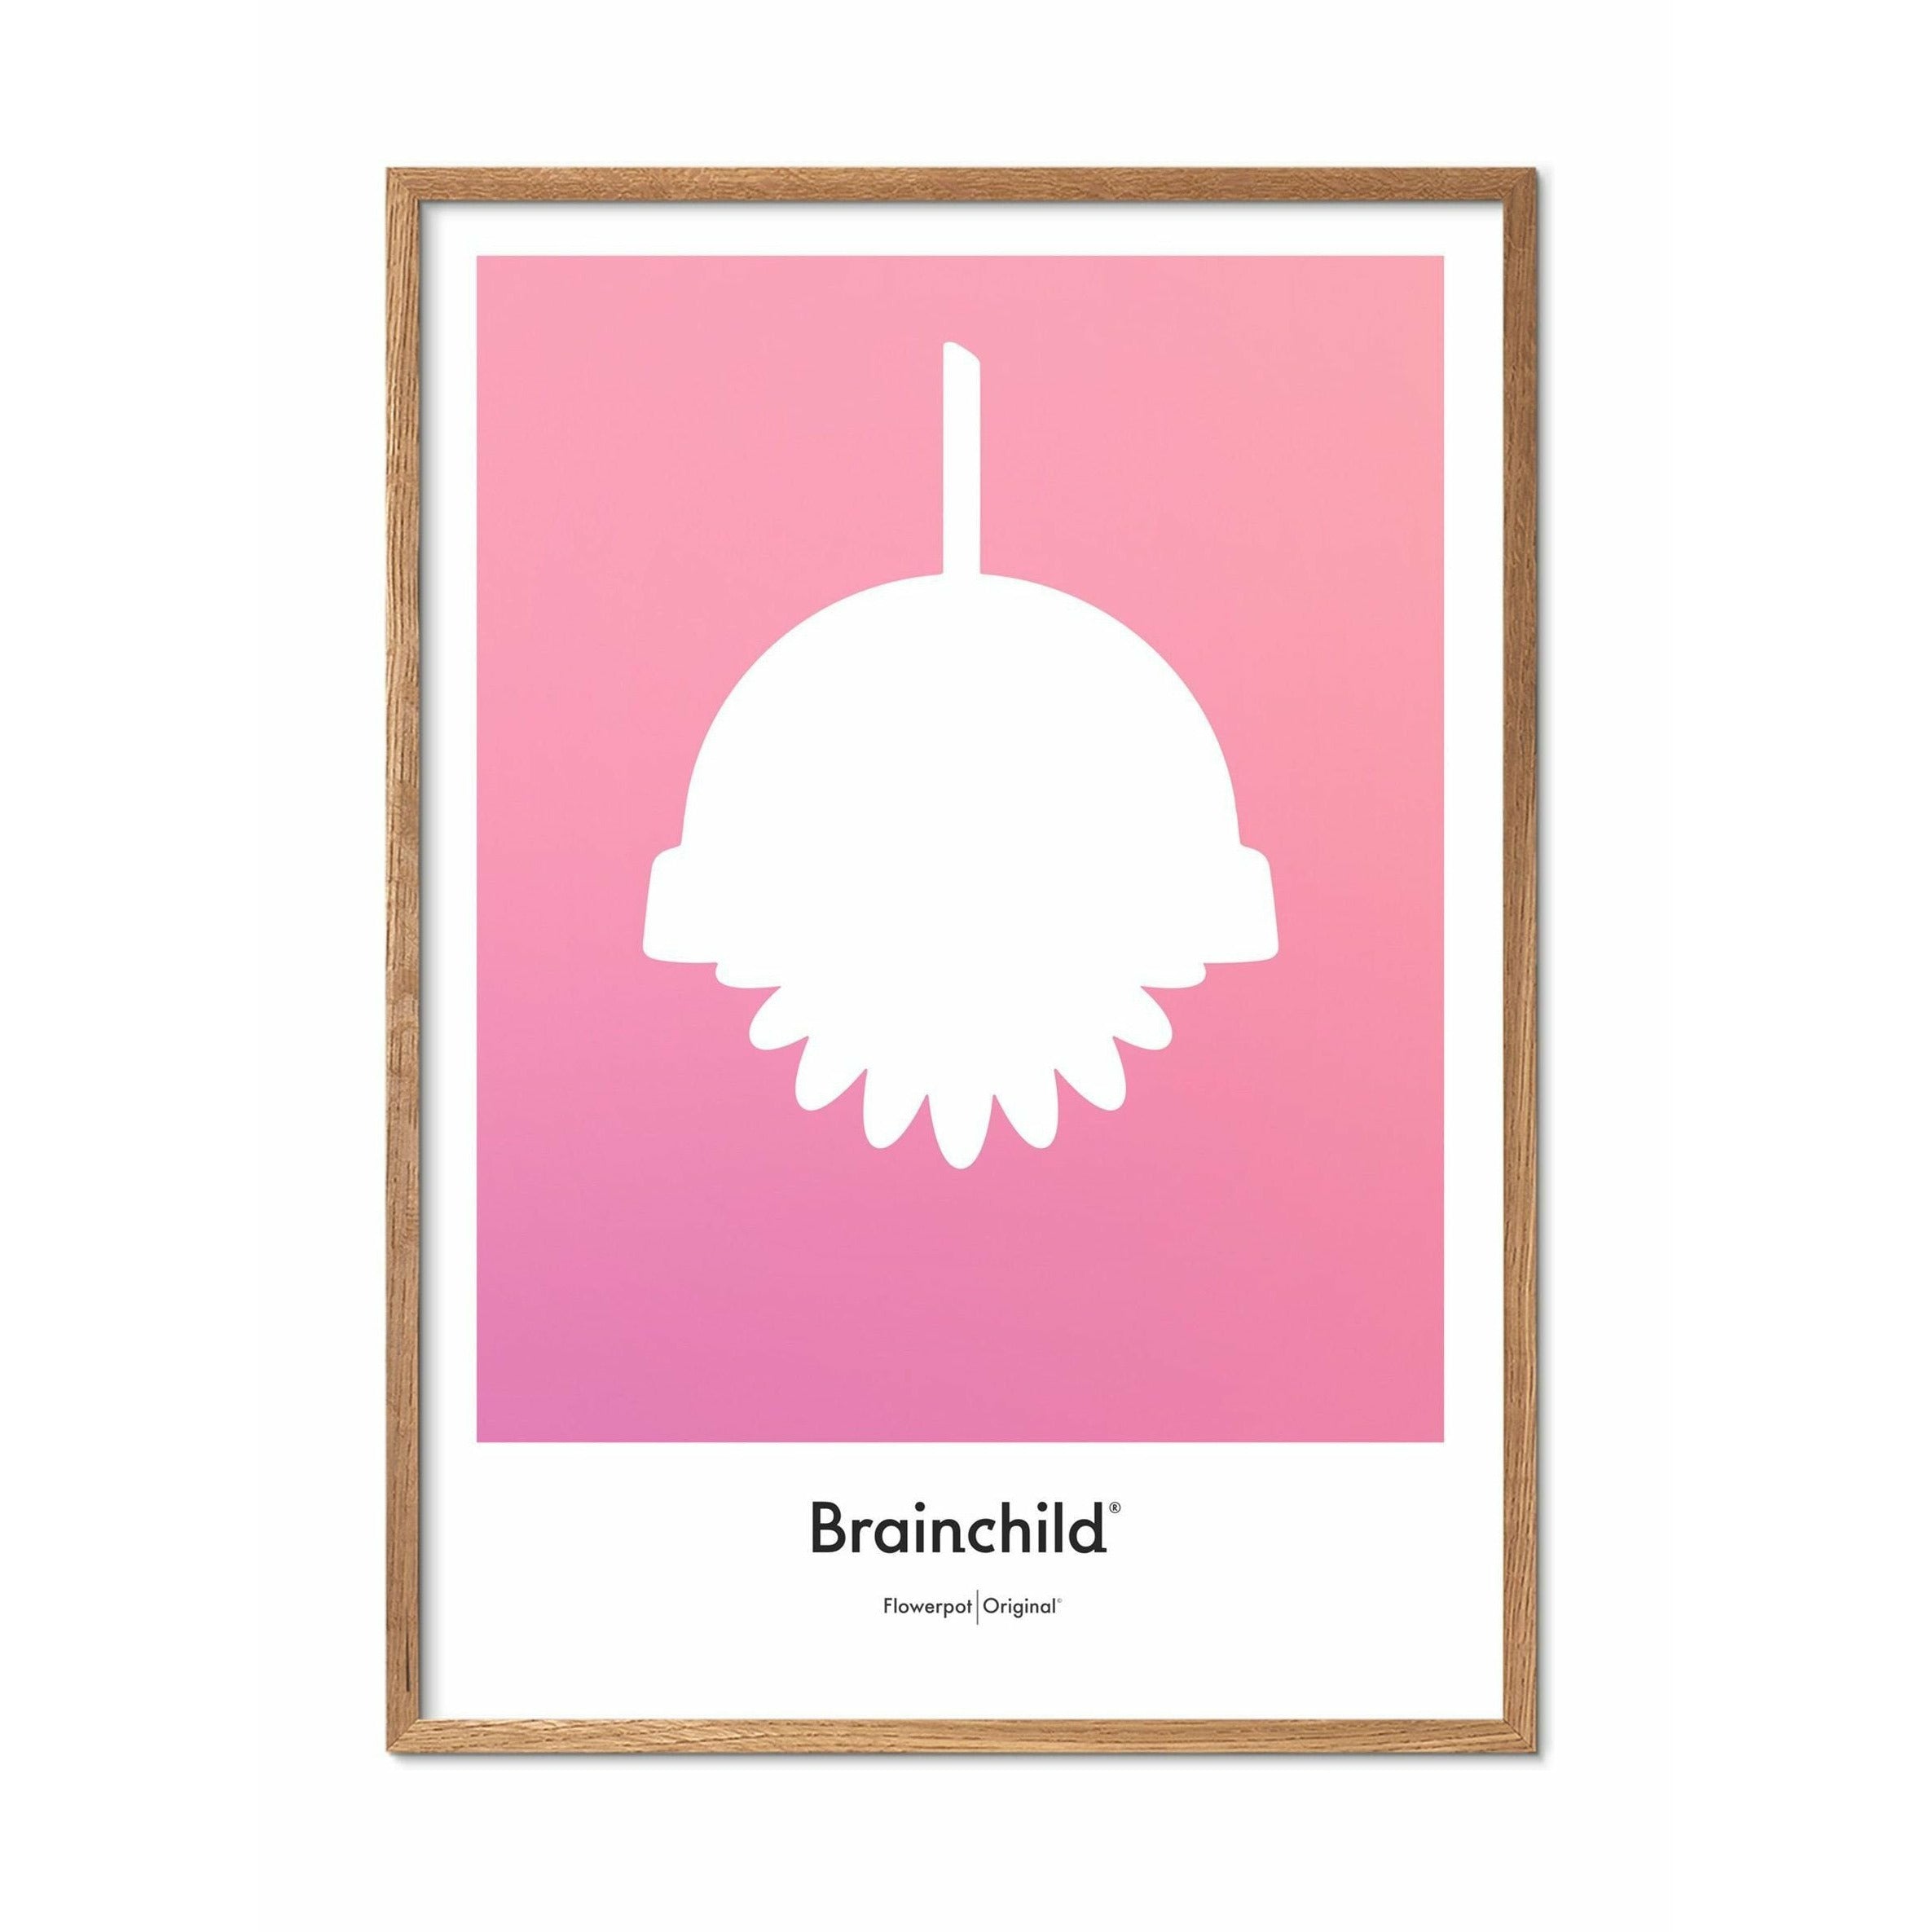 Brainchild Flowerpot Designikon Plakat, Ramme I Lyst Træ 70X100 Cm, Rosa